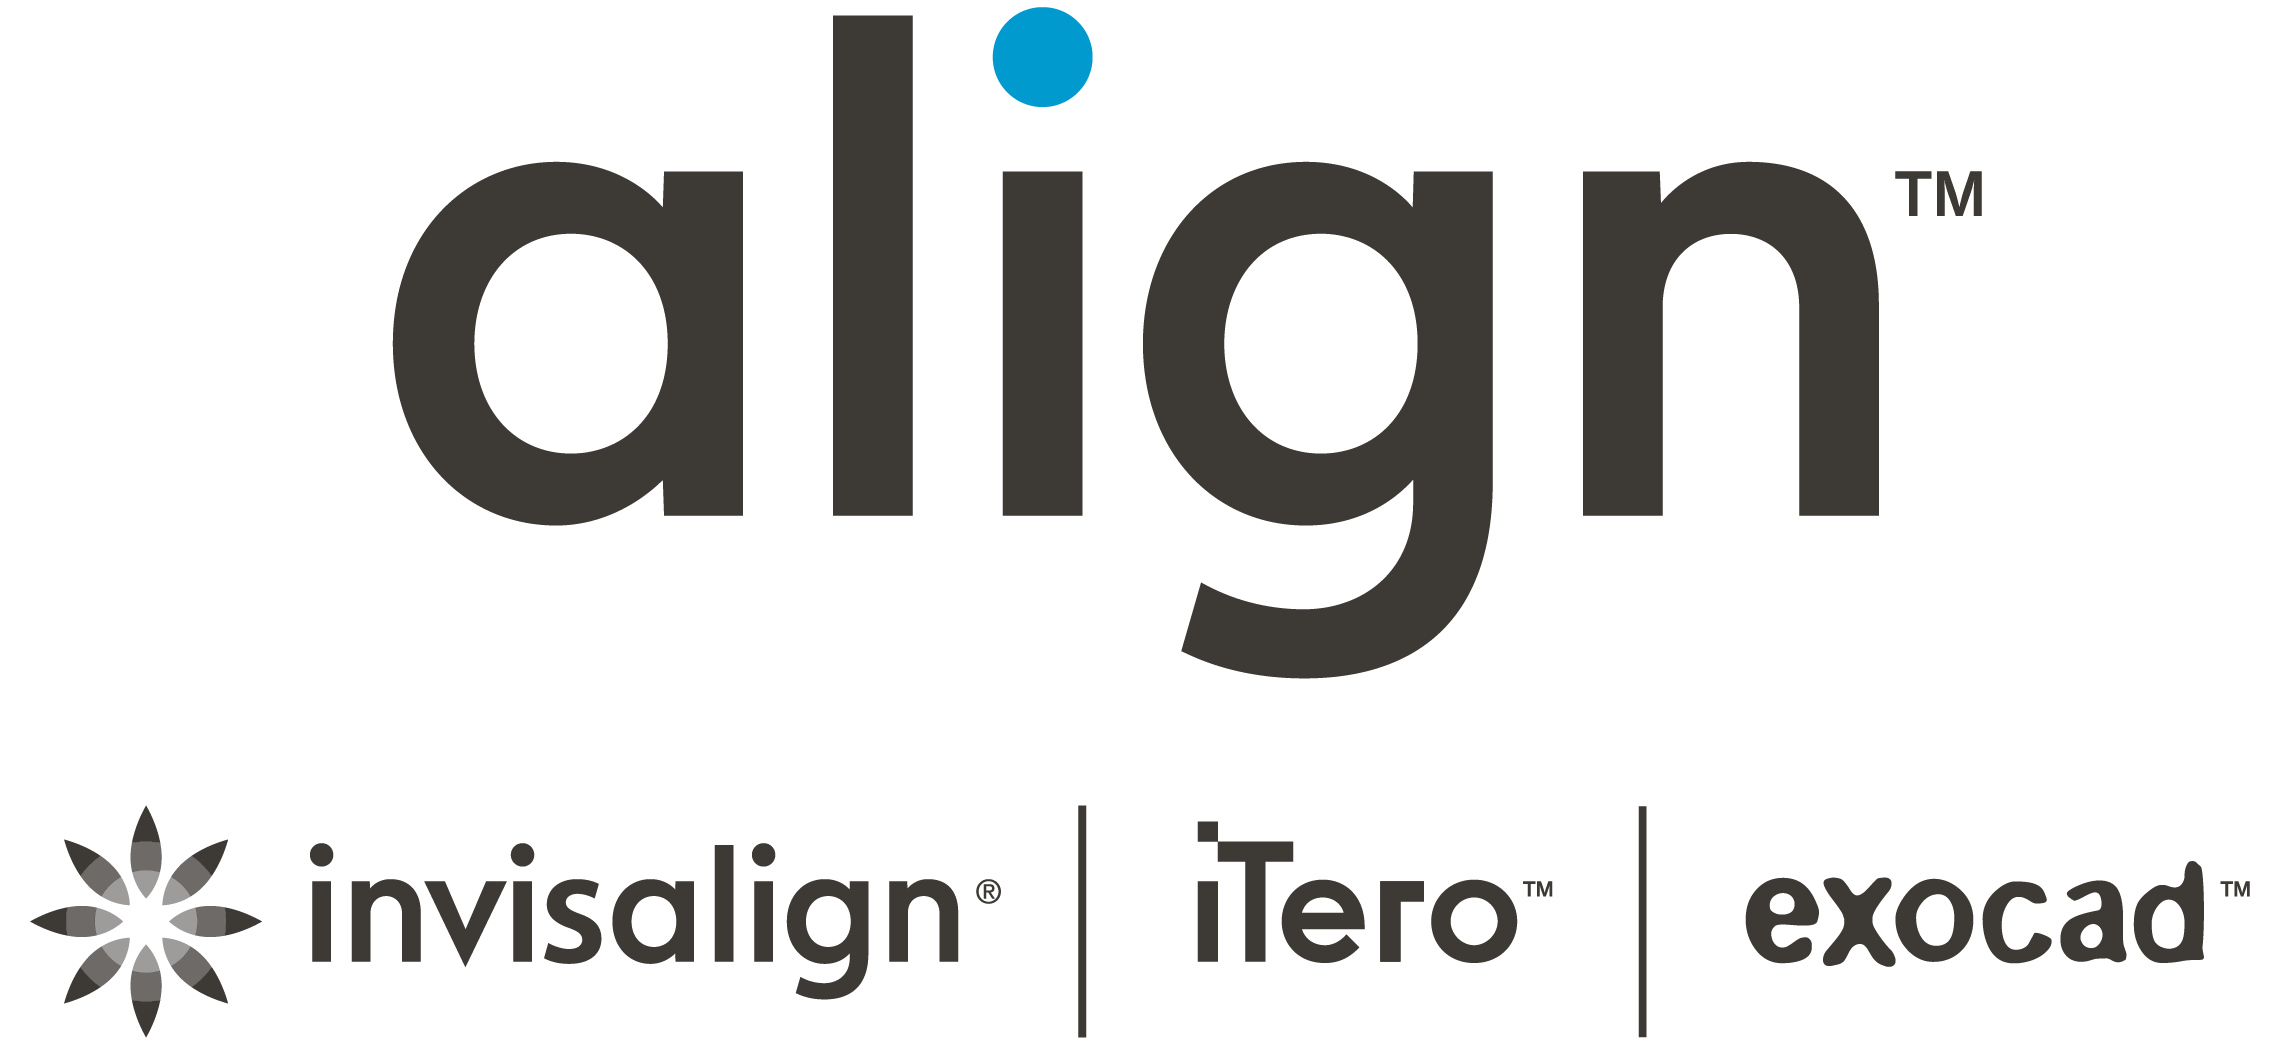 Align. Image credit: © Align